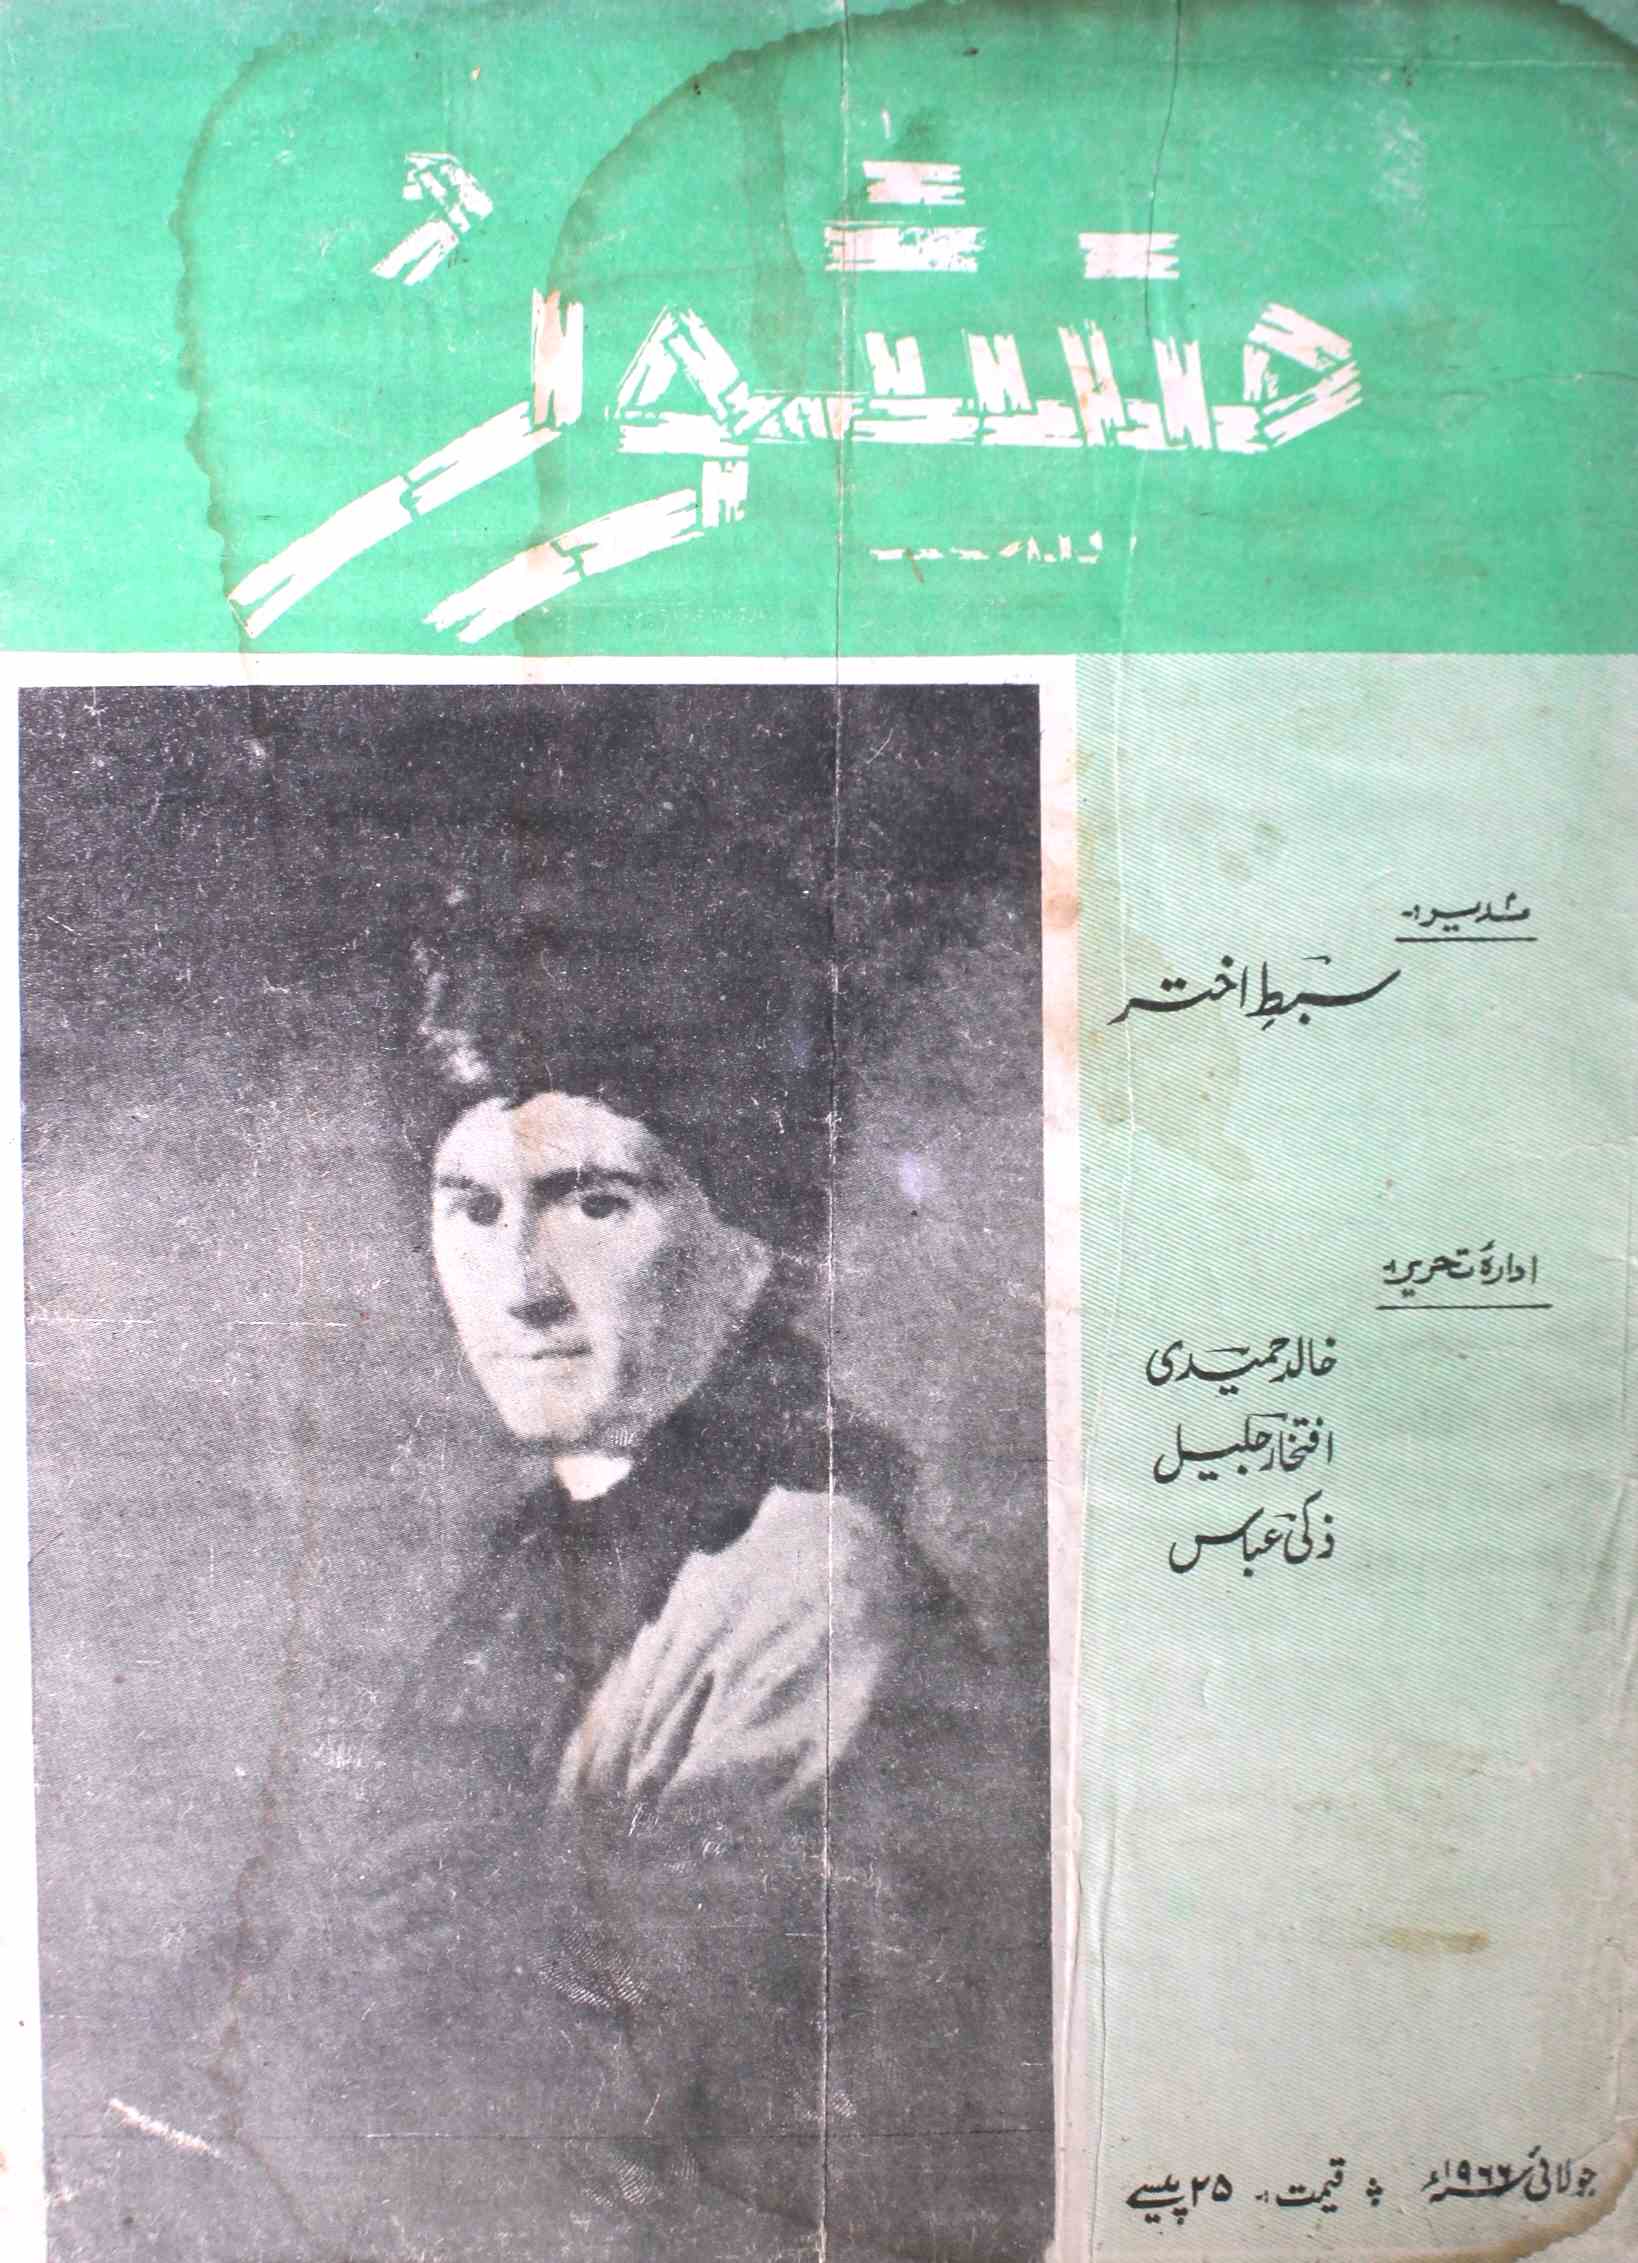 Manshoor Jild.3 No.7 July 1966-SVK-Shumara Number-007